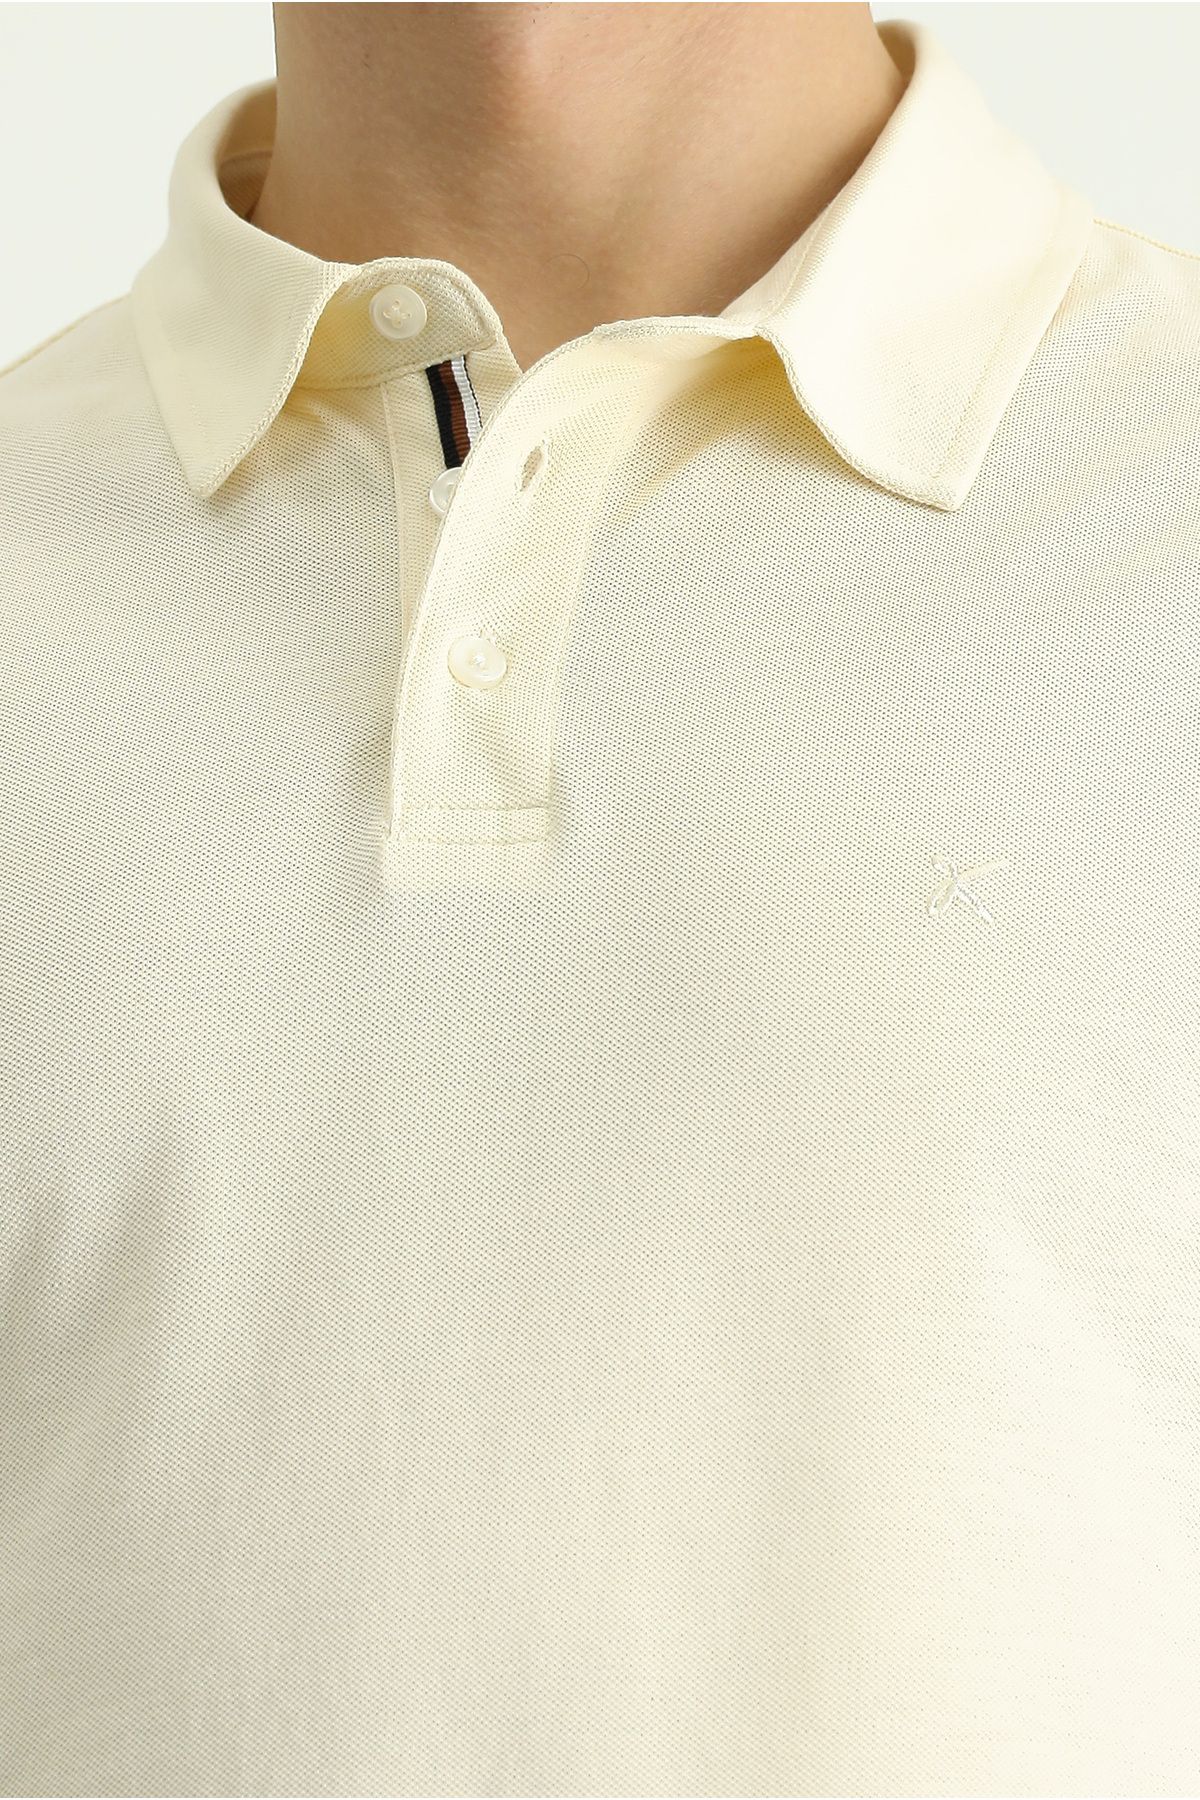 Kiğılı Polo Yaka Slim Fit Bark cut Cotton T shirt